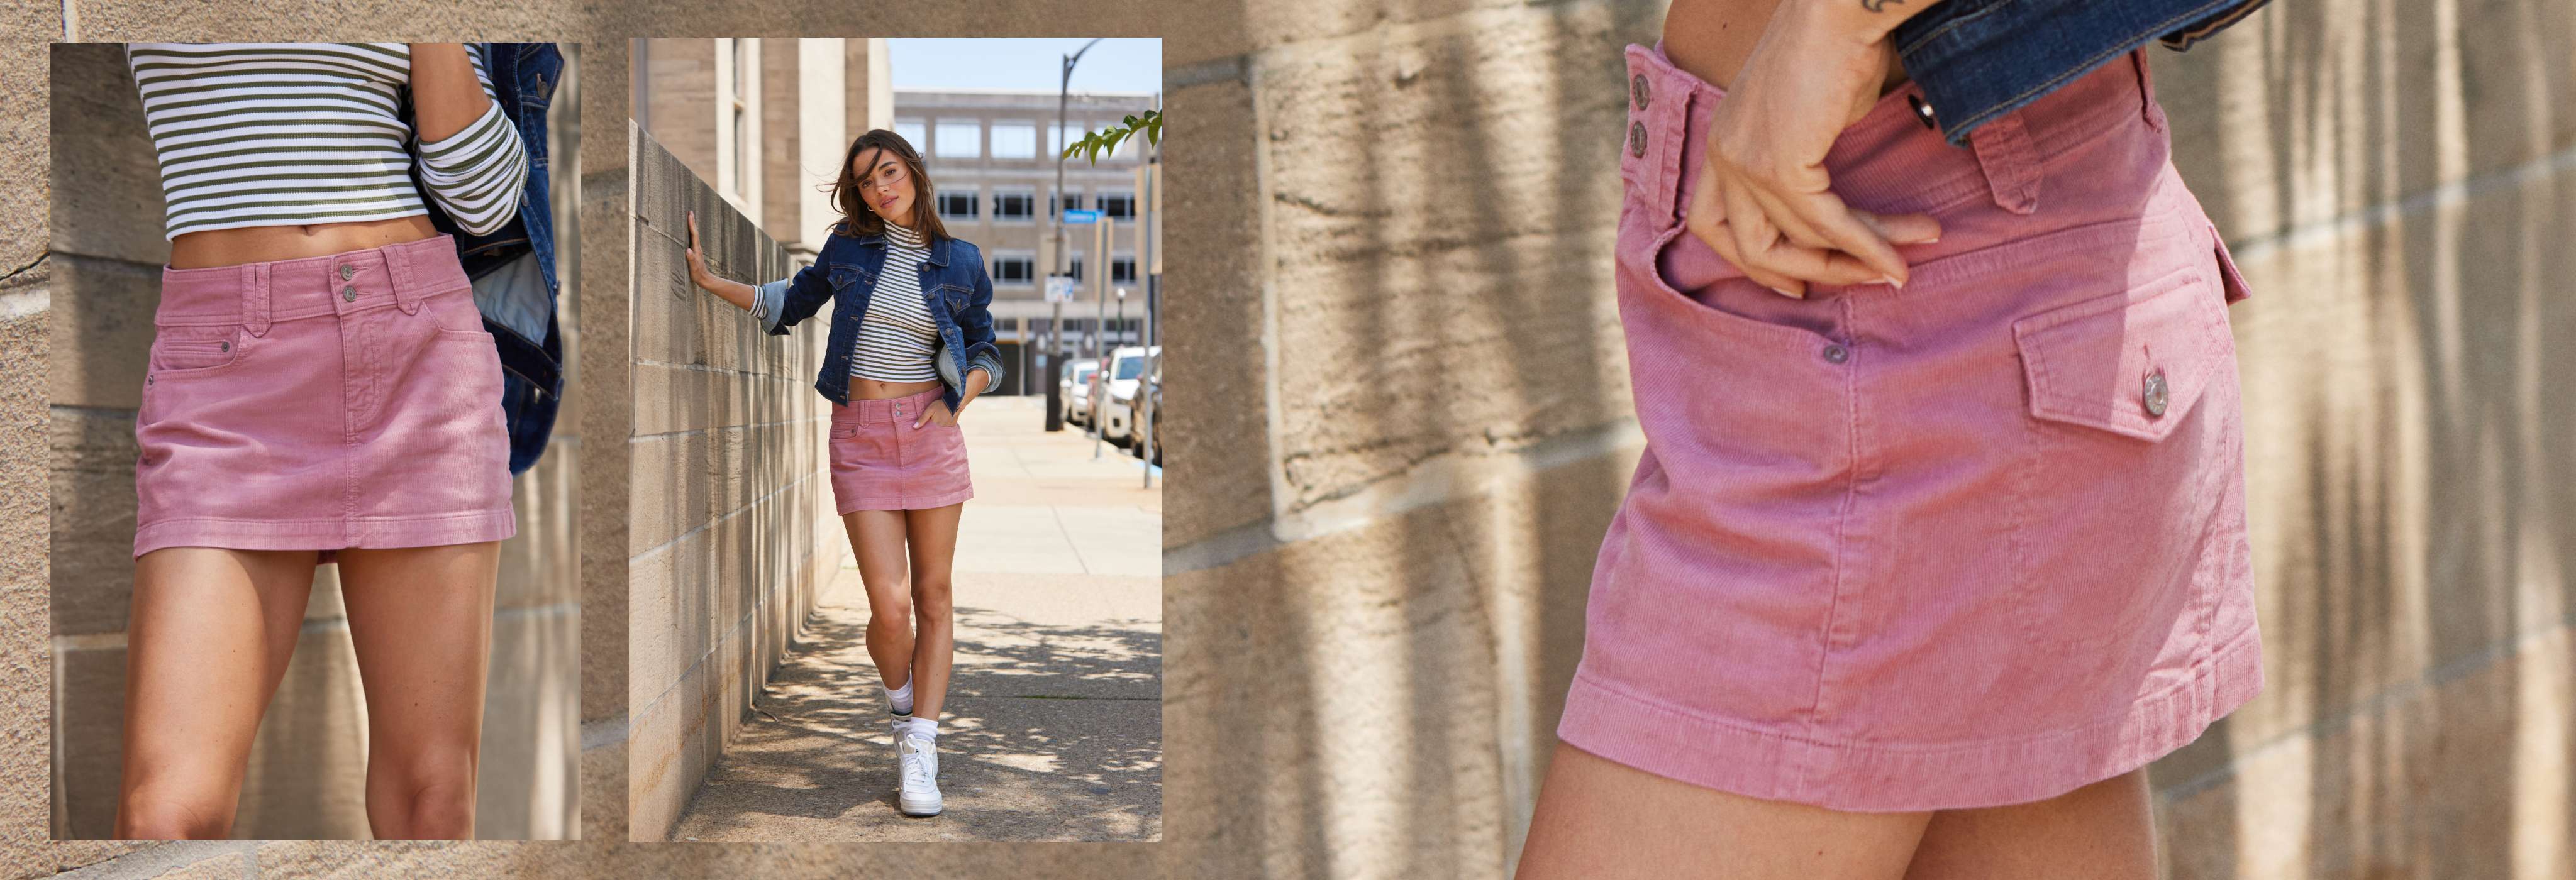 Model in pink AE skirt